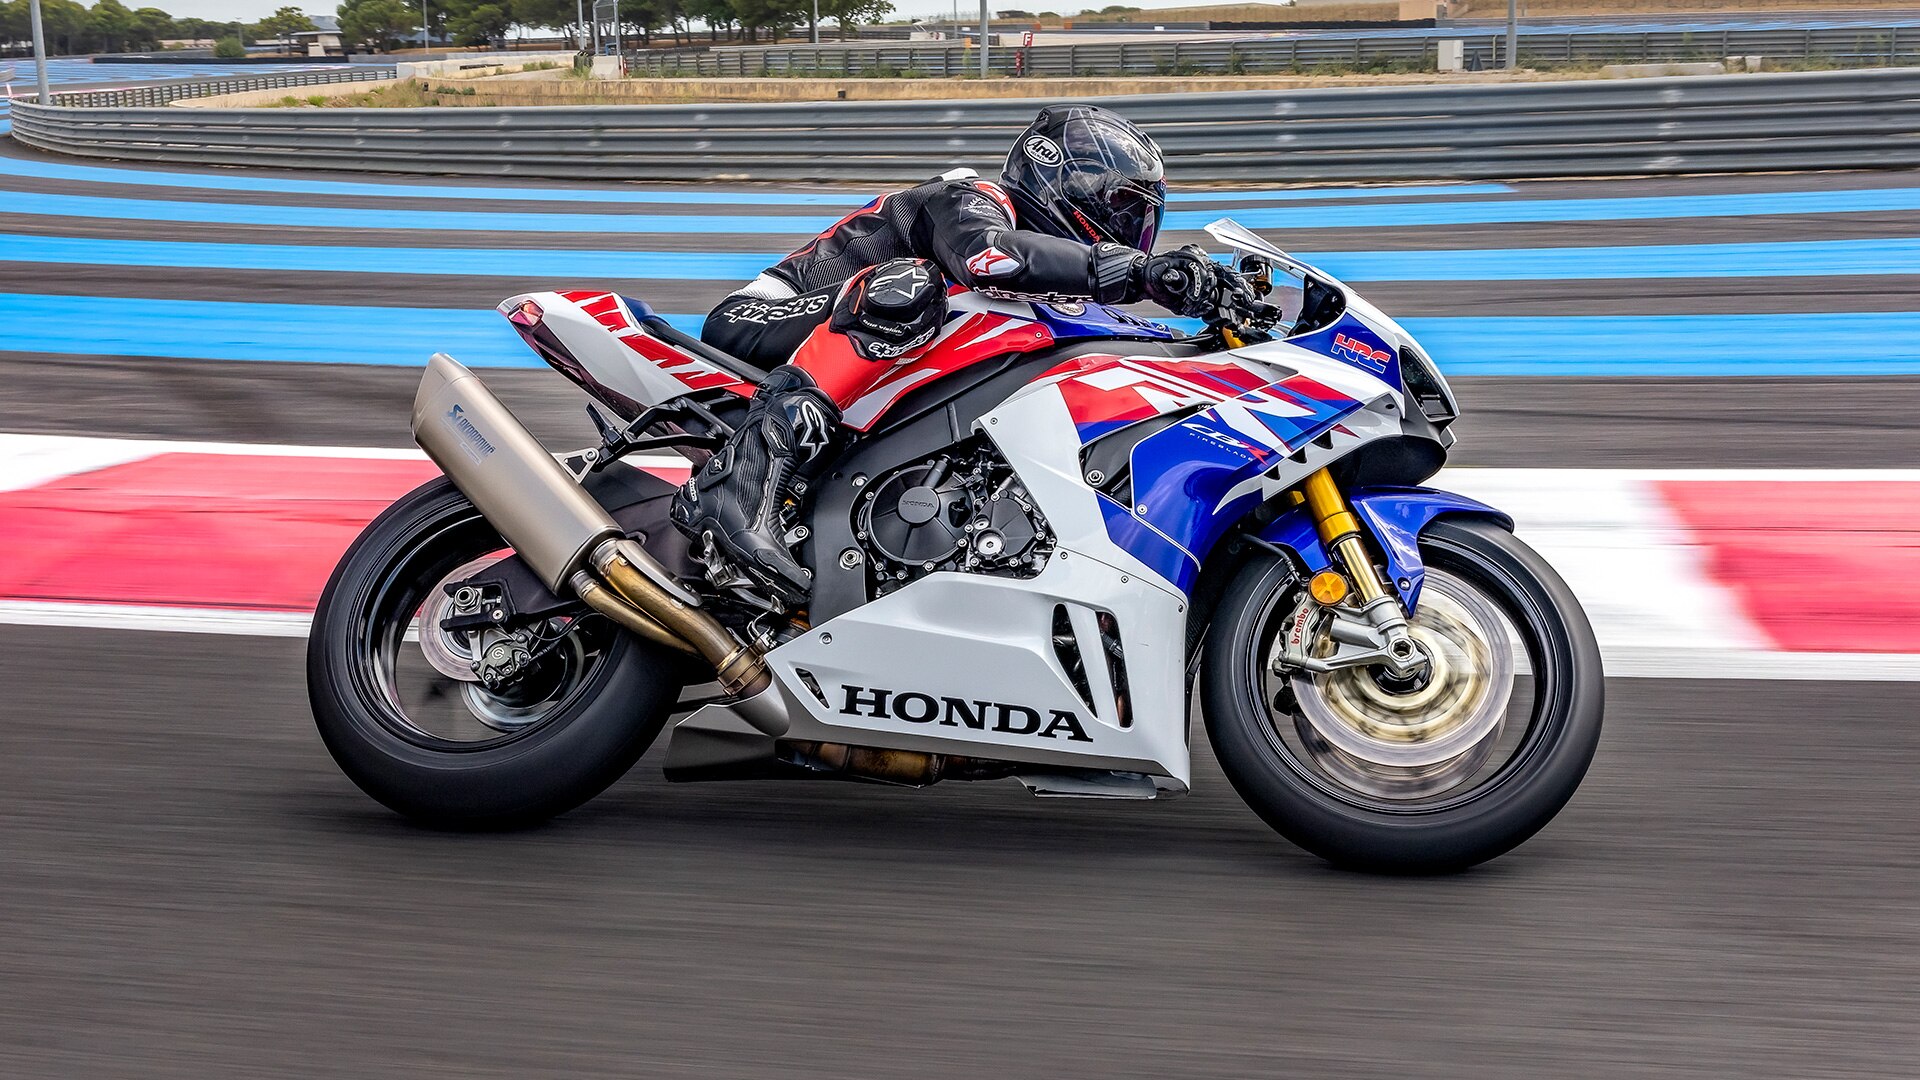 Honda CBR1000RR-R Fireblade SP 2022. Motocycliste sur la piste de course.